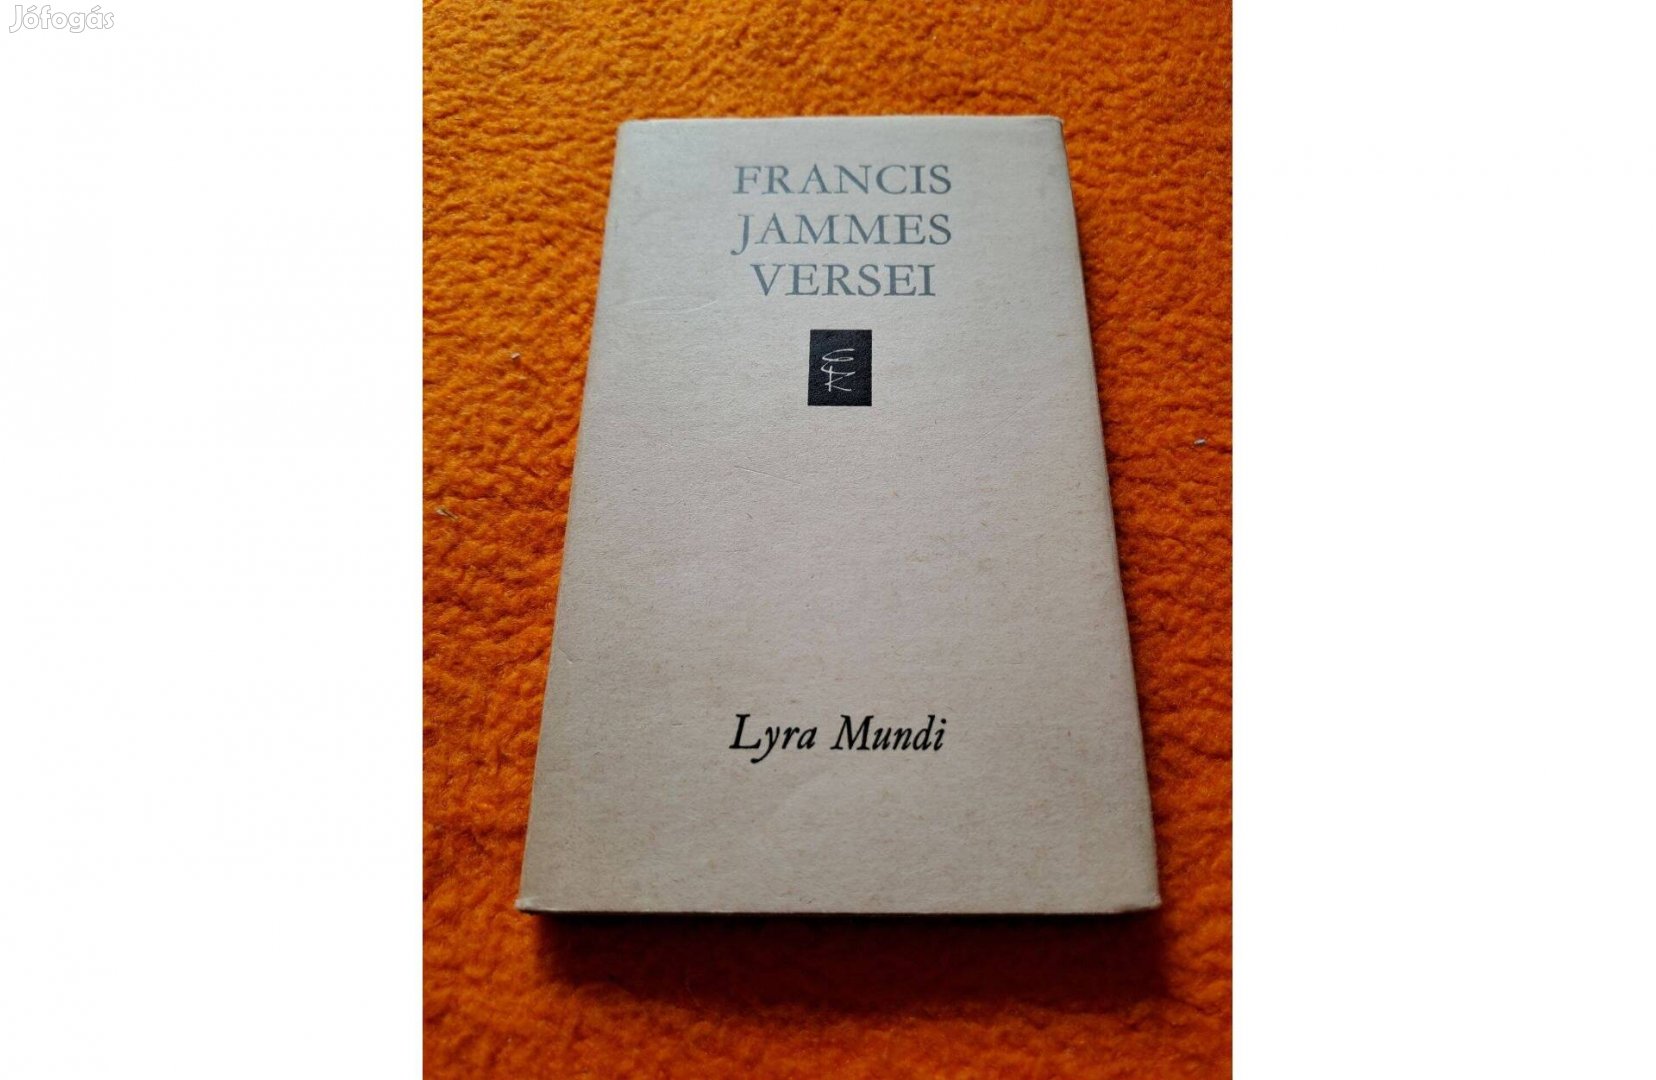 Francis Jammes versei - Lyra Mundi - Európa Könyvkiadó 1984